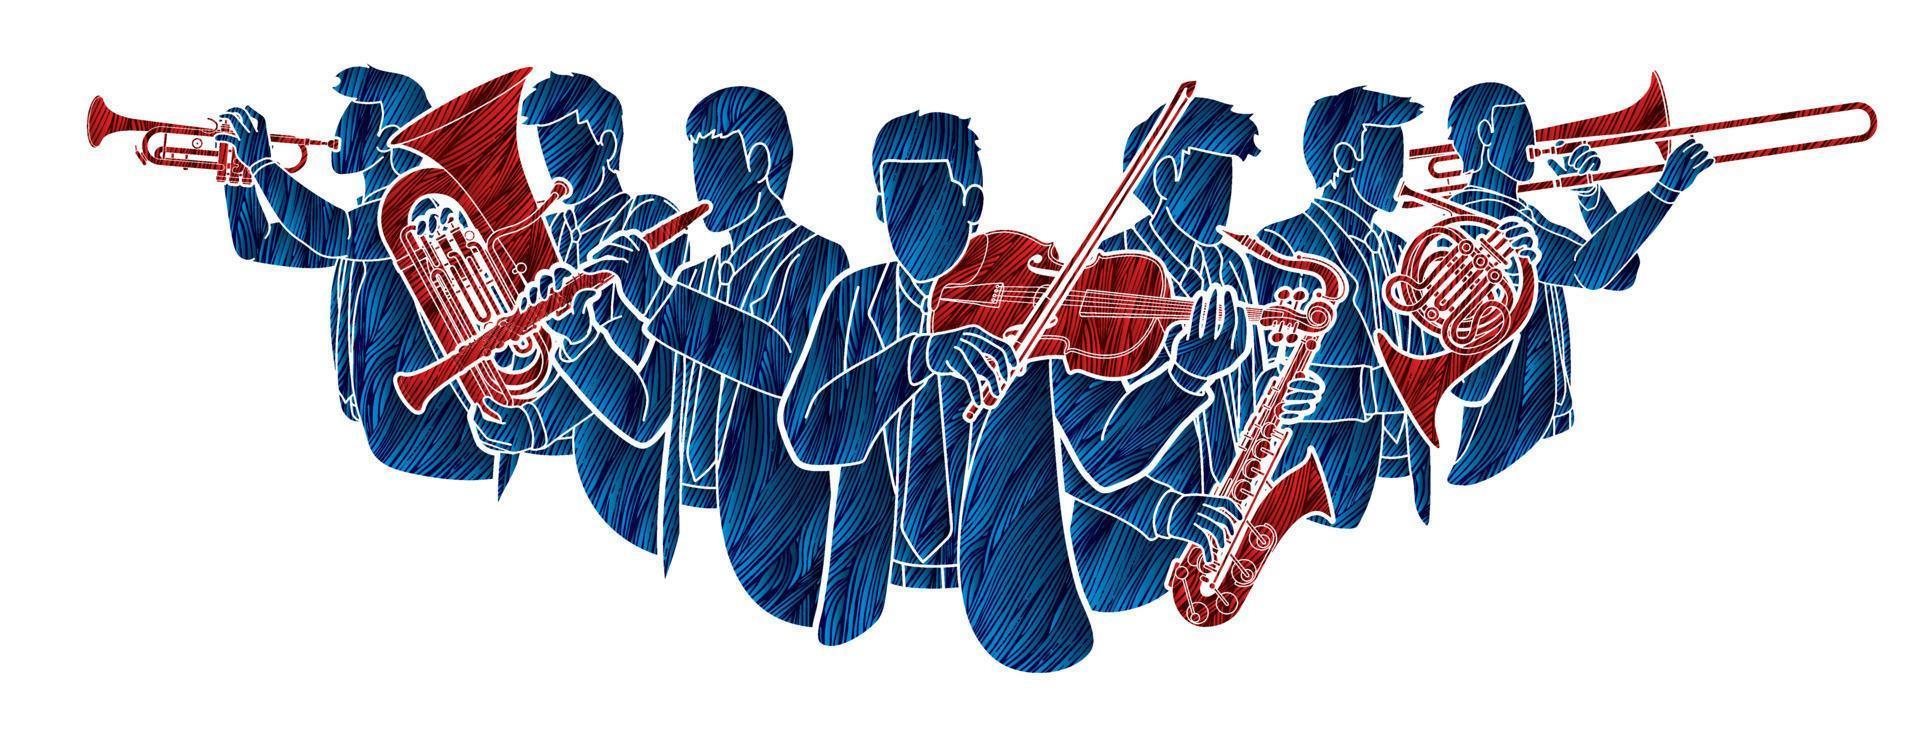 grupo de músicos de orquesta instrumento músico vector